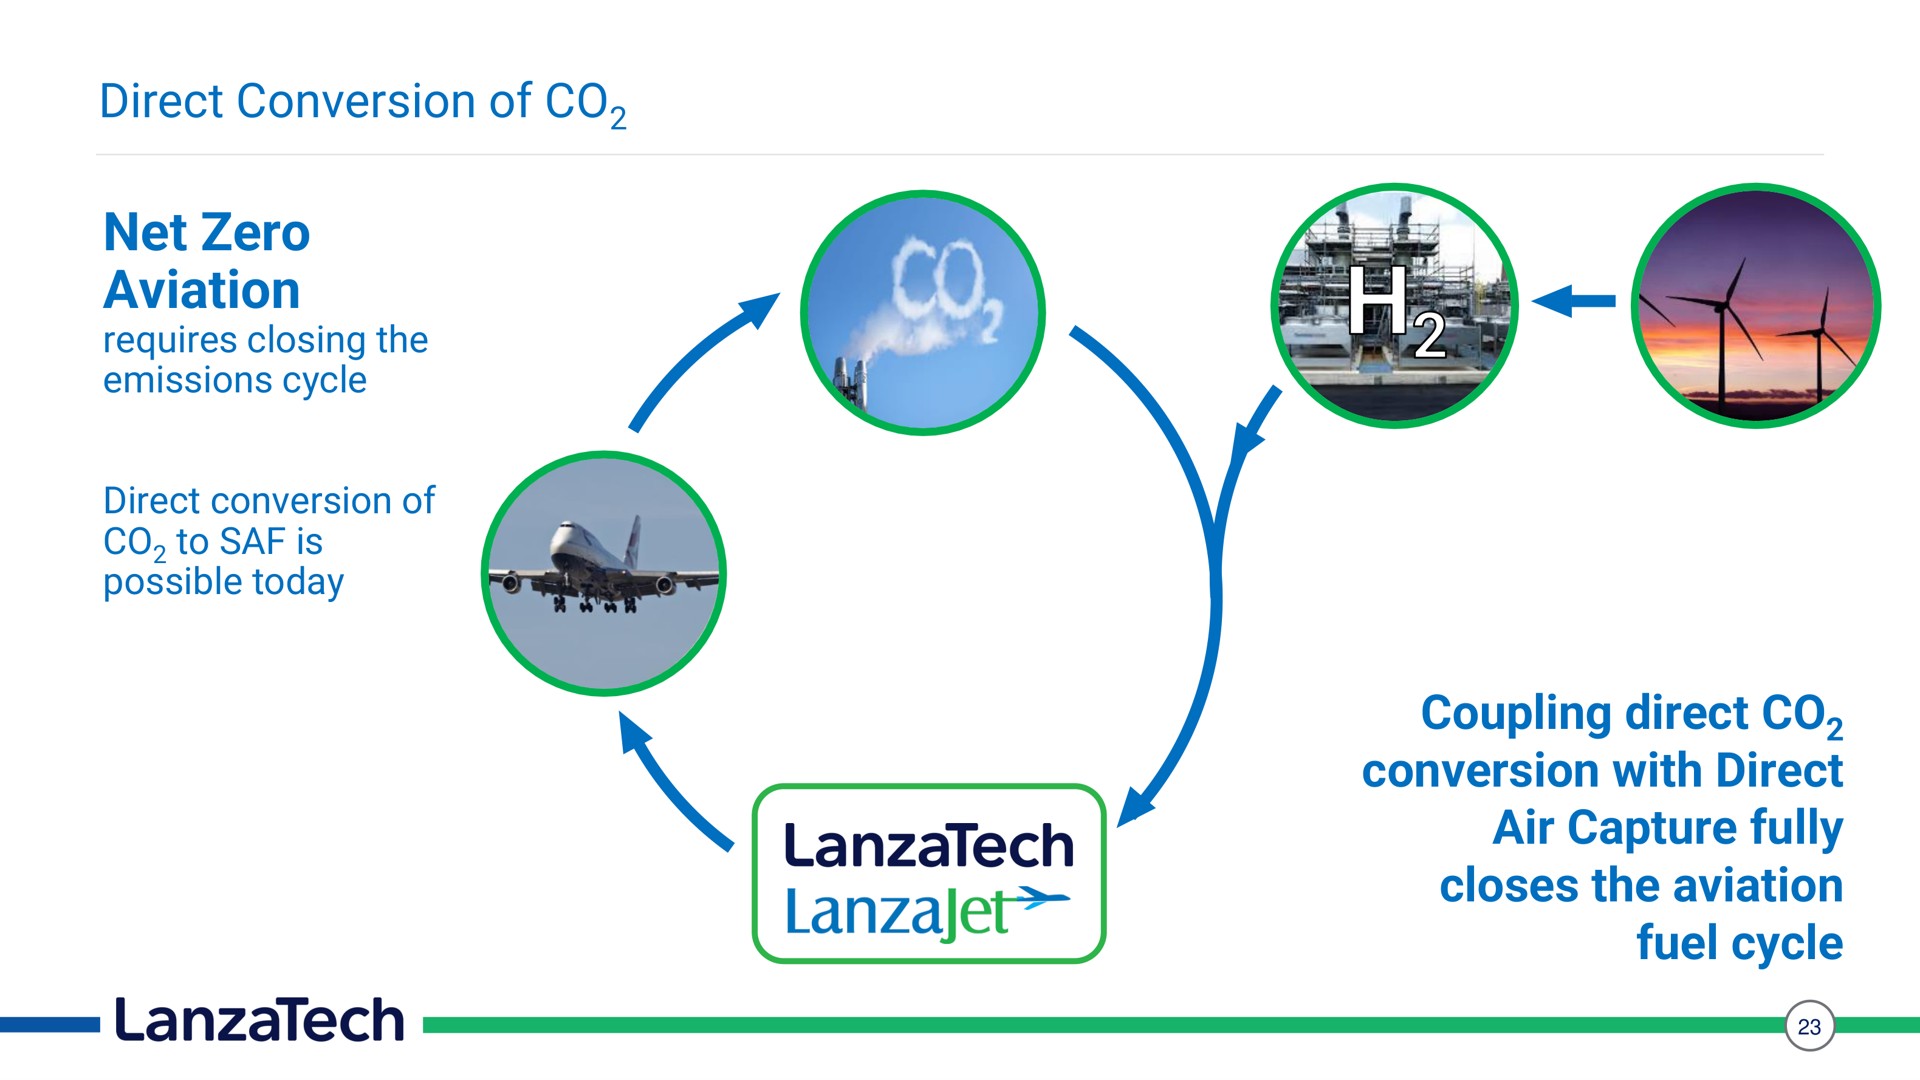 direct conversion of net zero aviation coupling direct conversion with direct air capture fully closes the aviation fuel cycle | LanzaTech